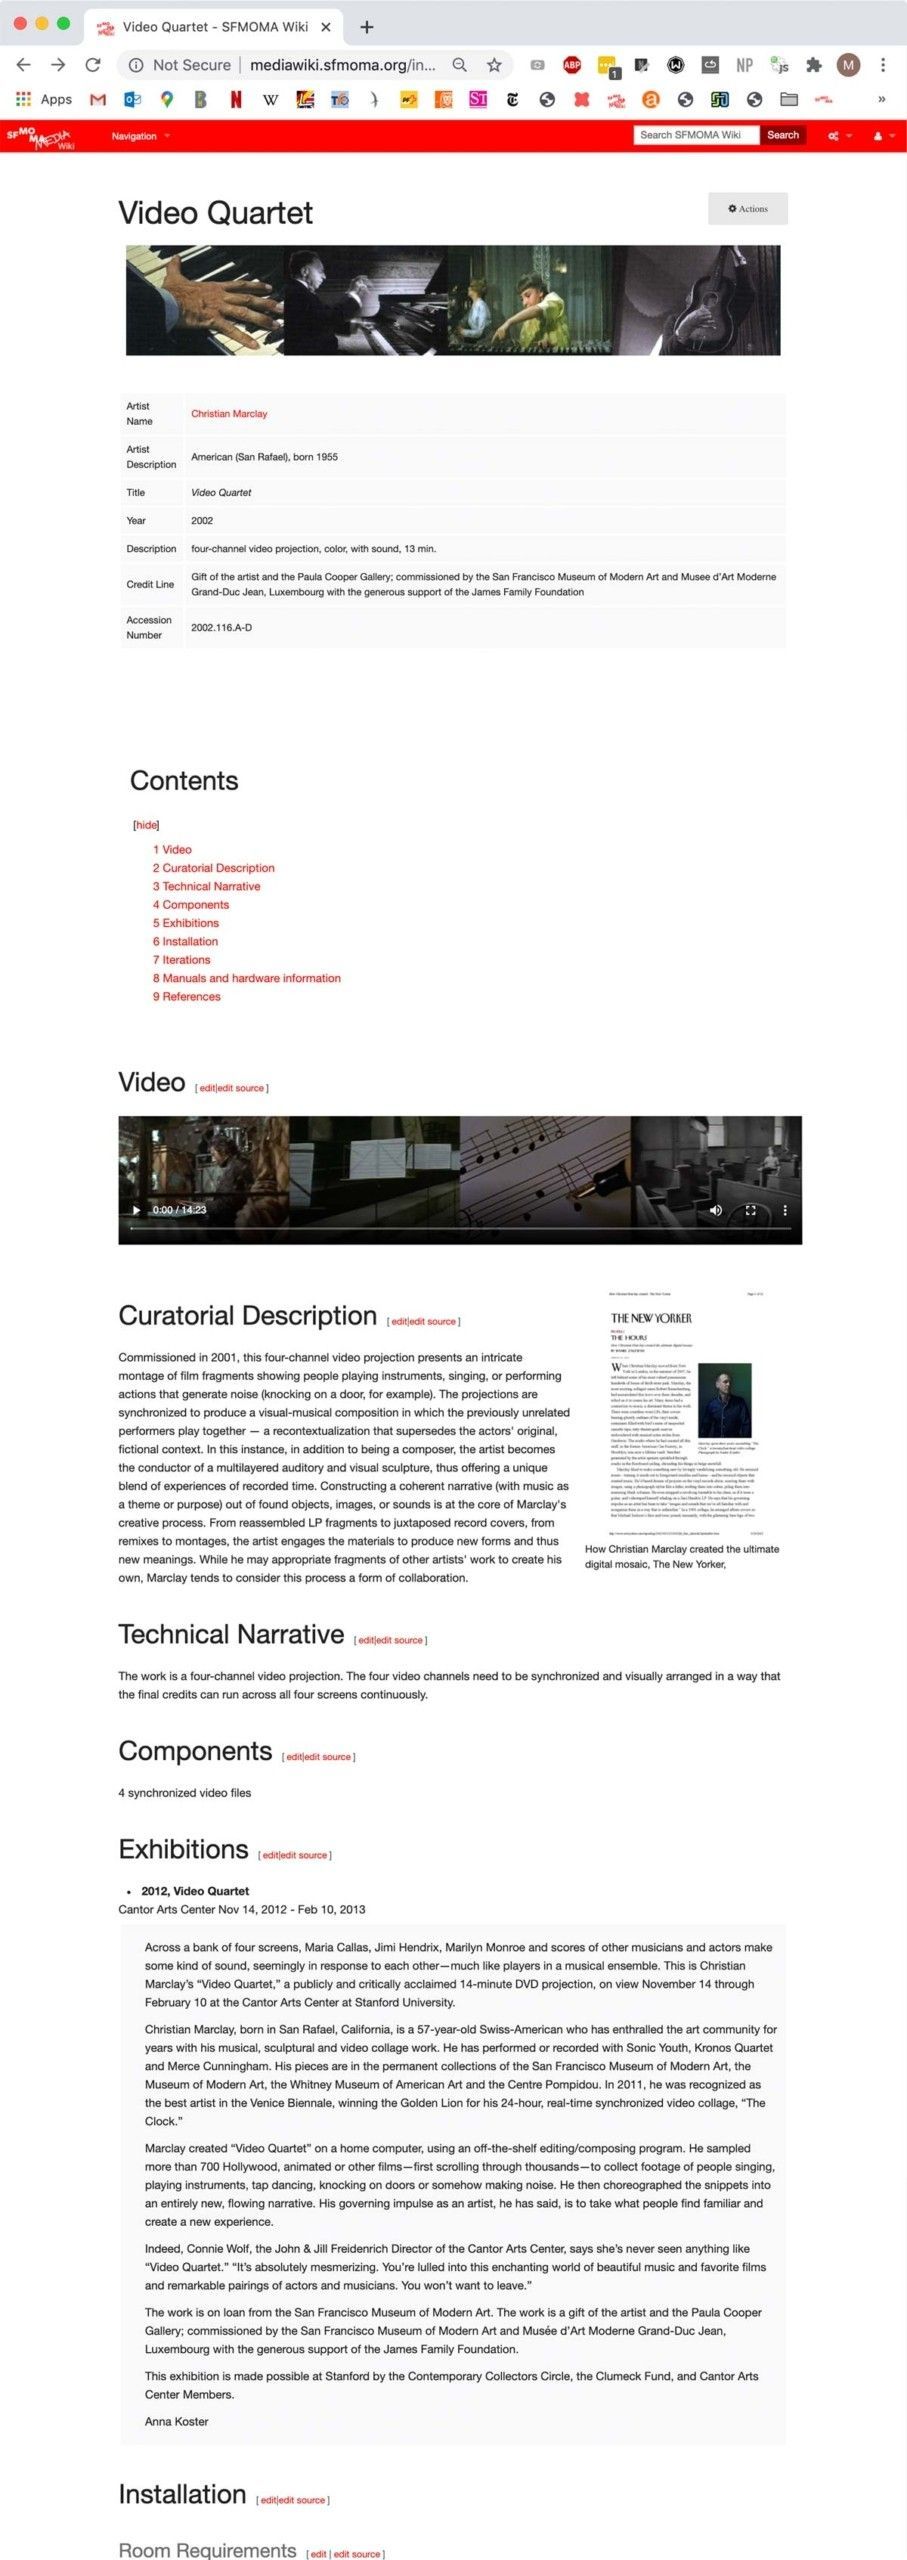 Figure 5. View of the Video Quartet artwork page on SFMOMA’s MediaWiki documentation platform.